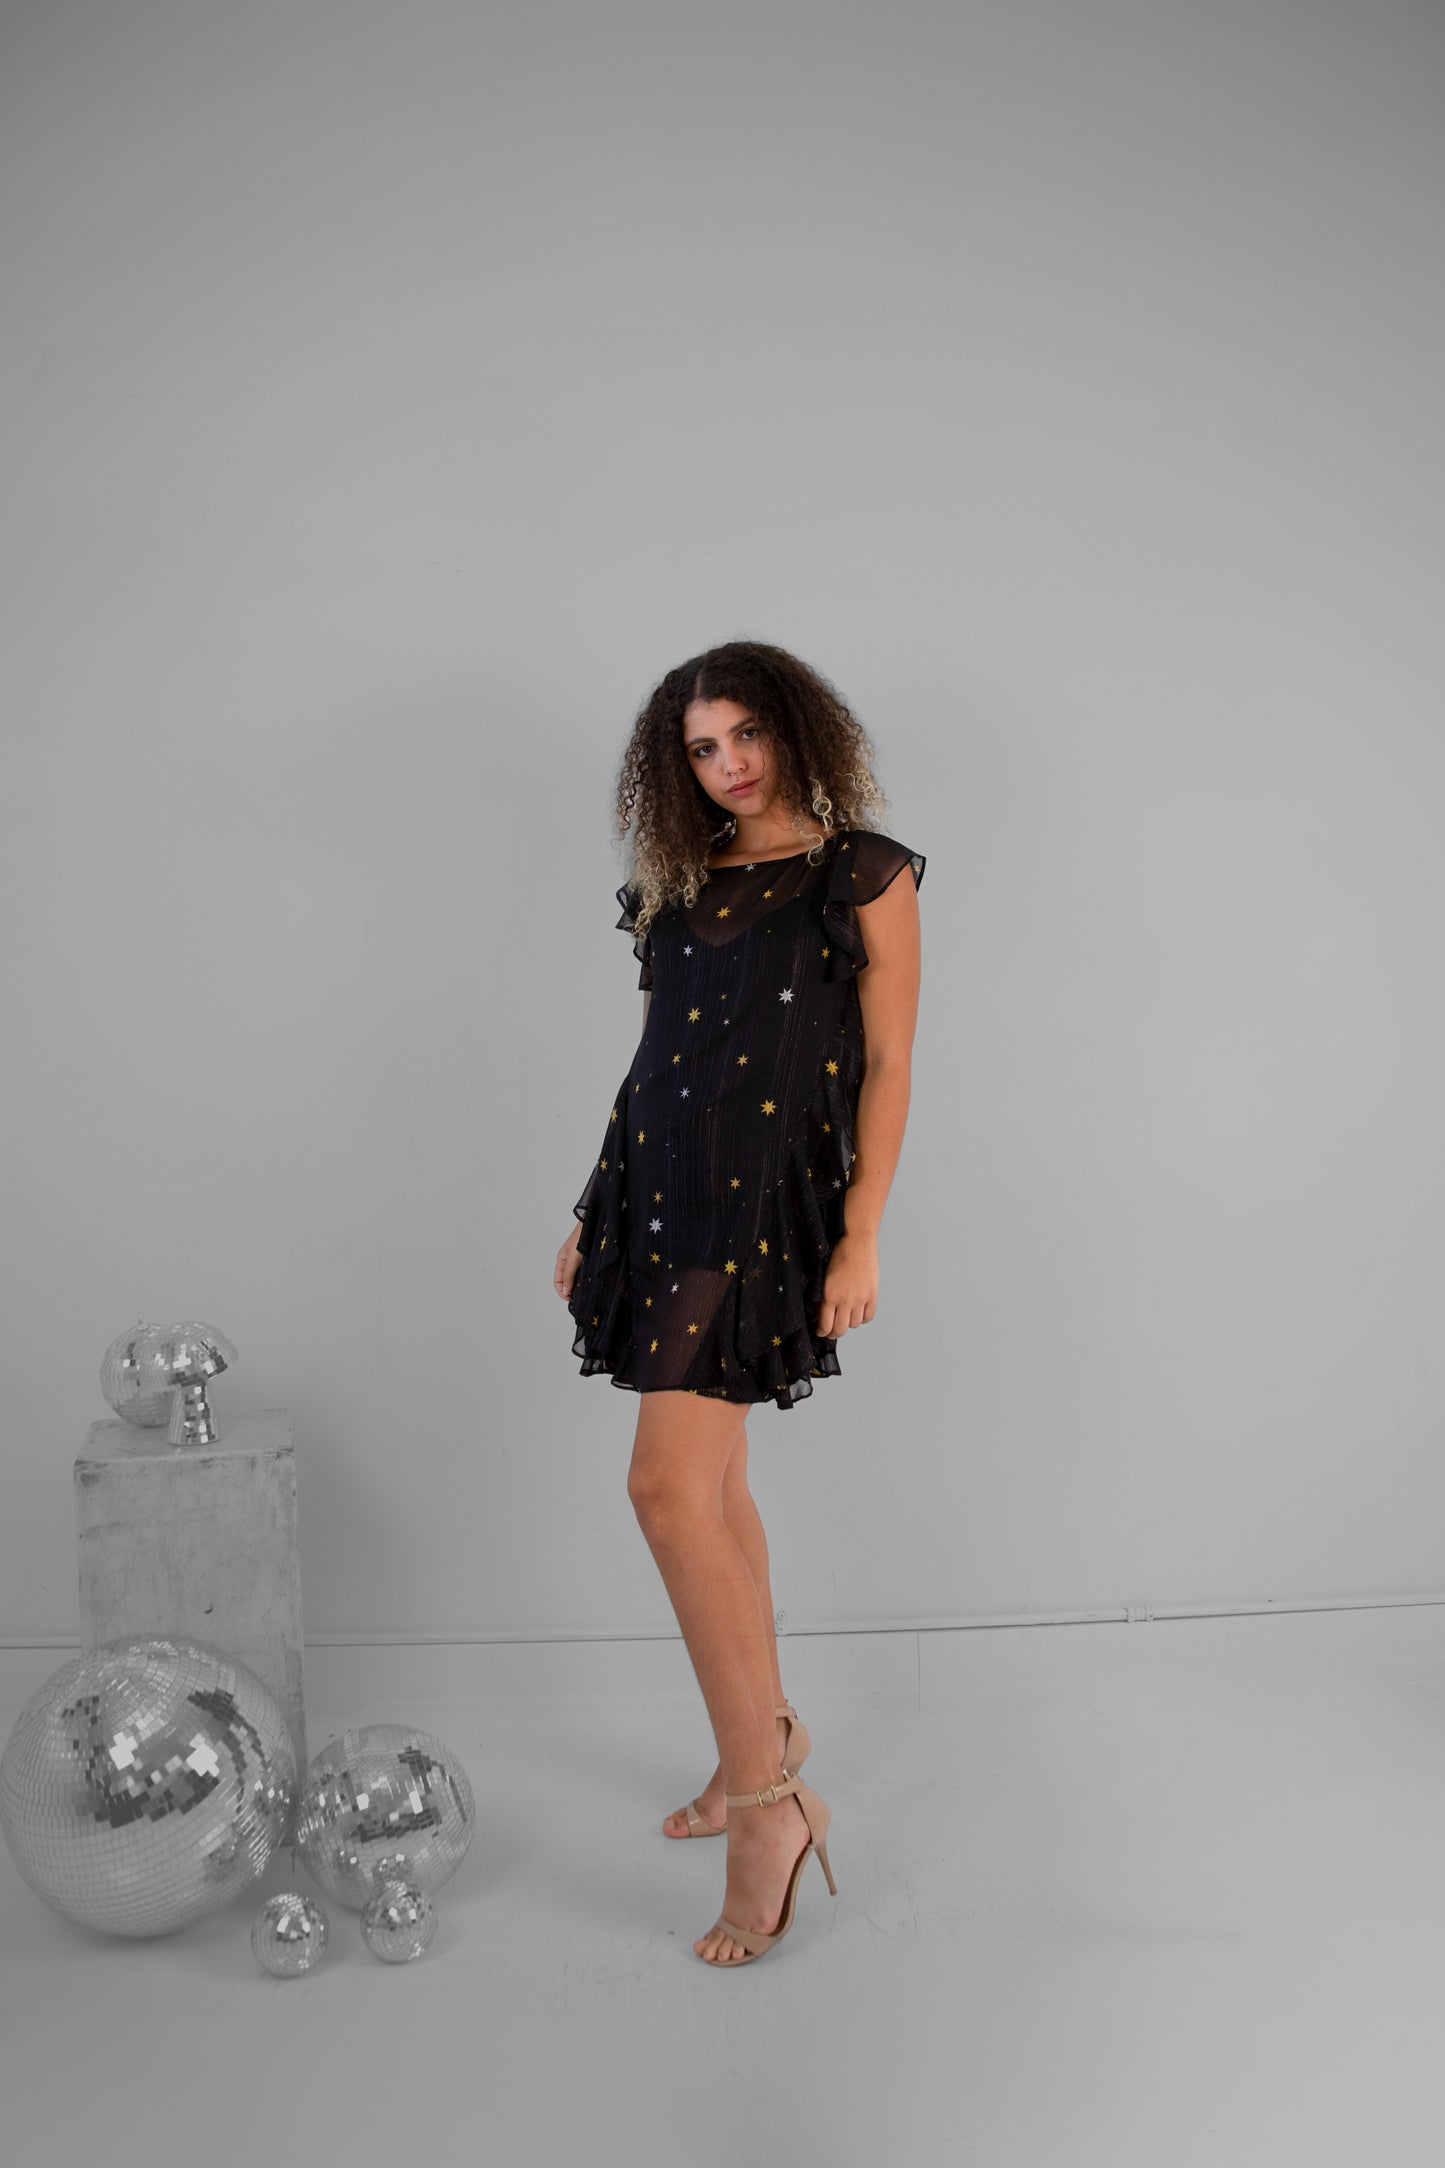 Lovers + Friends "Gail" Mini Dress in Star Bright (Black, Gold, Silver) - Small